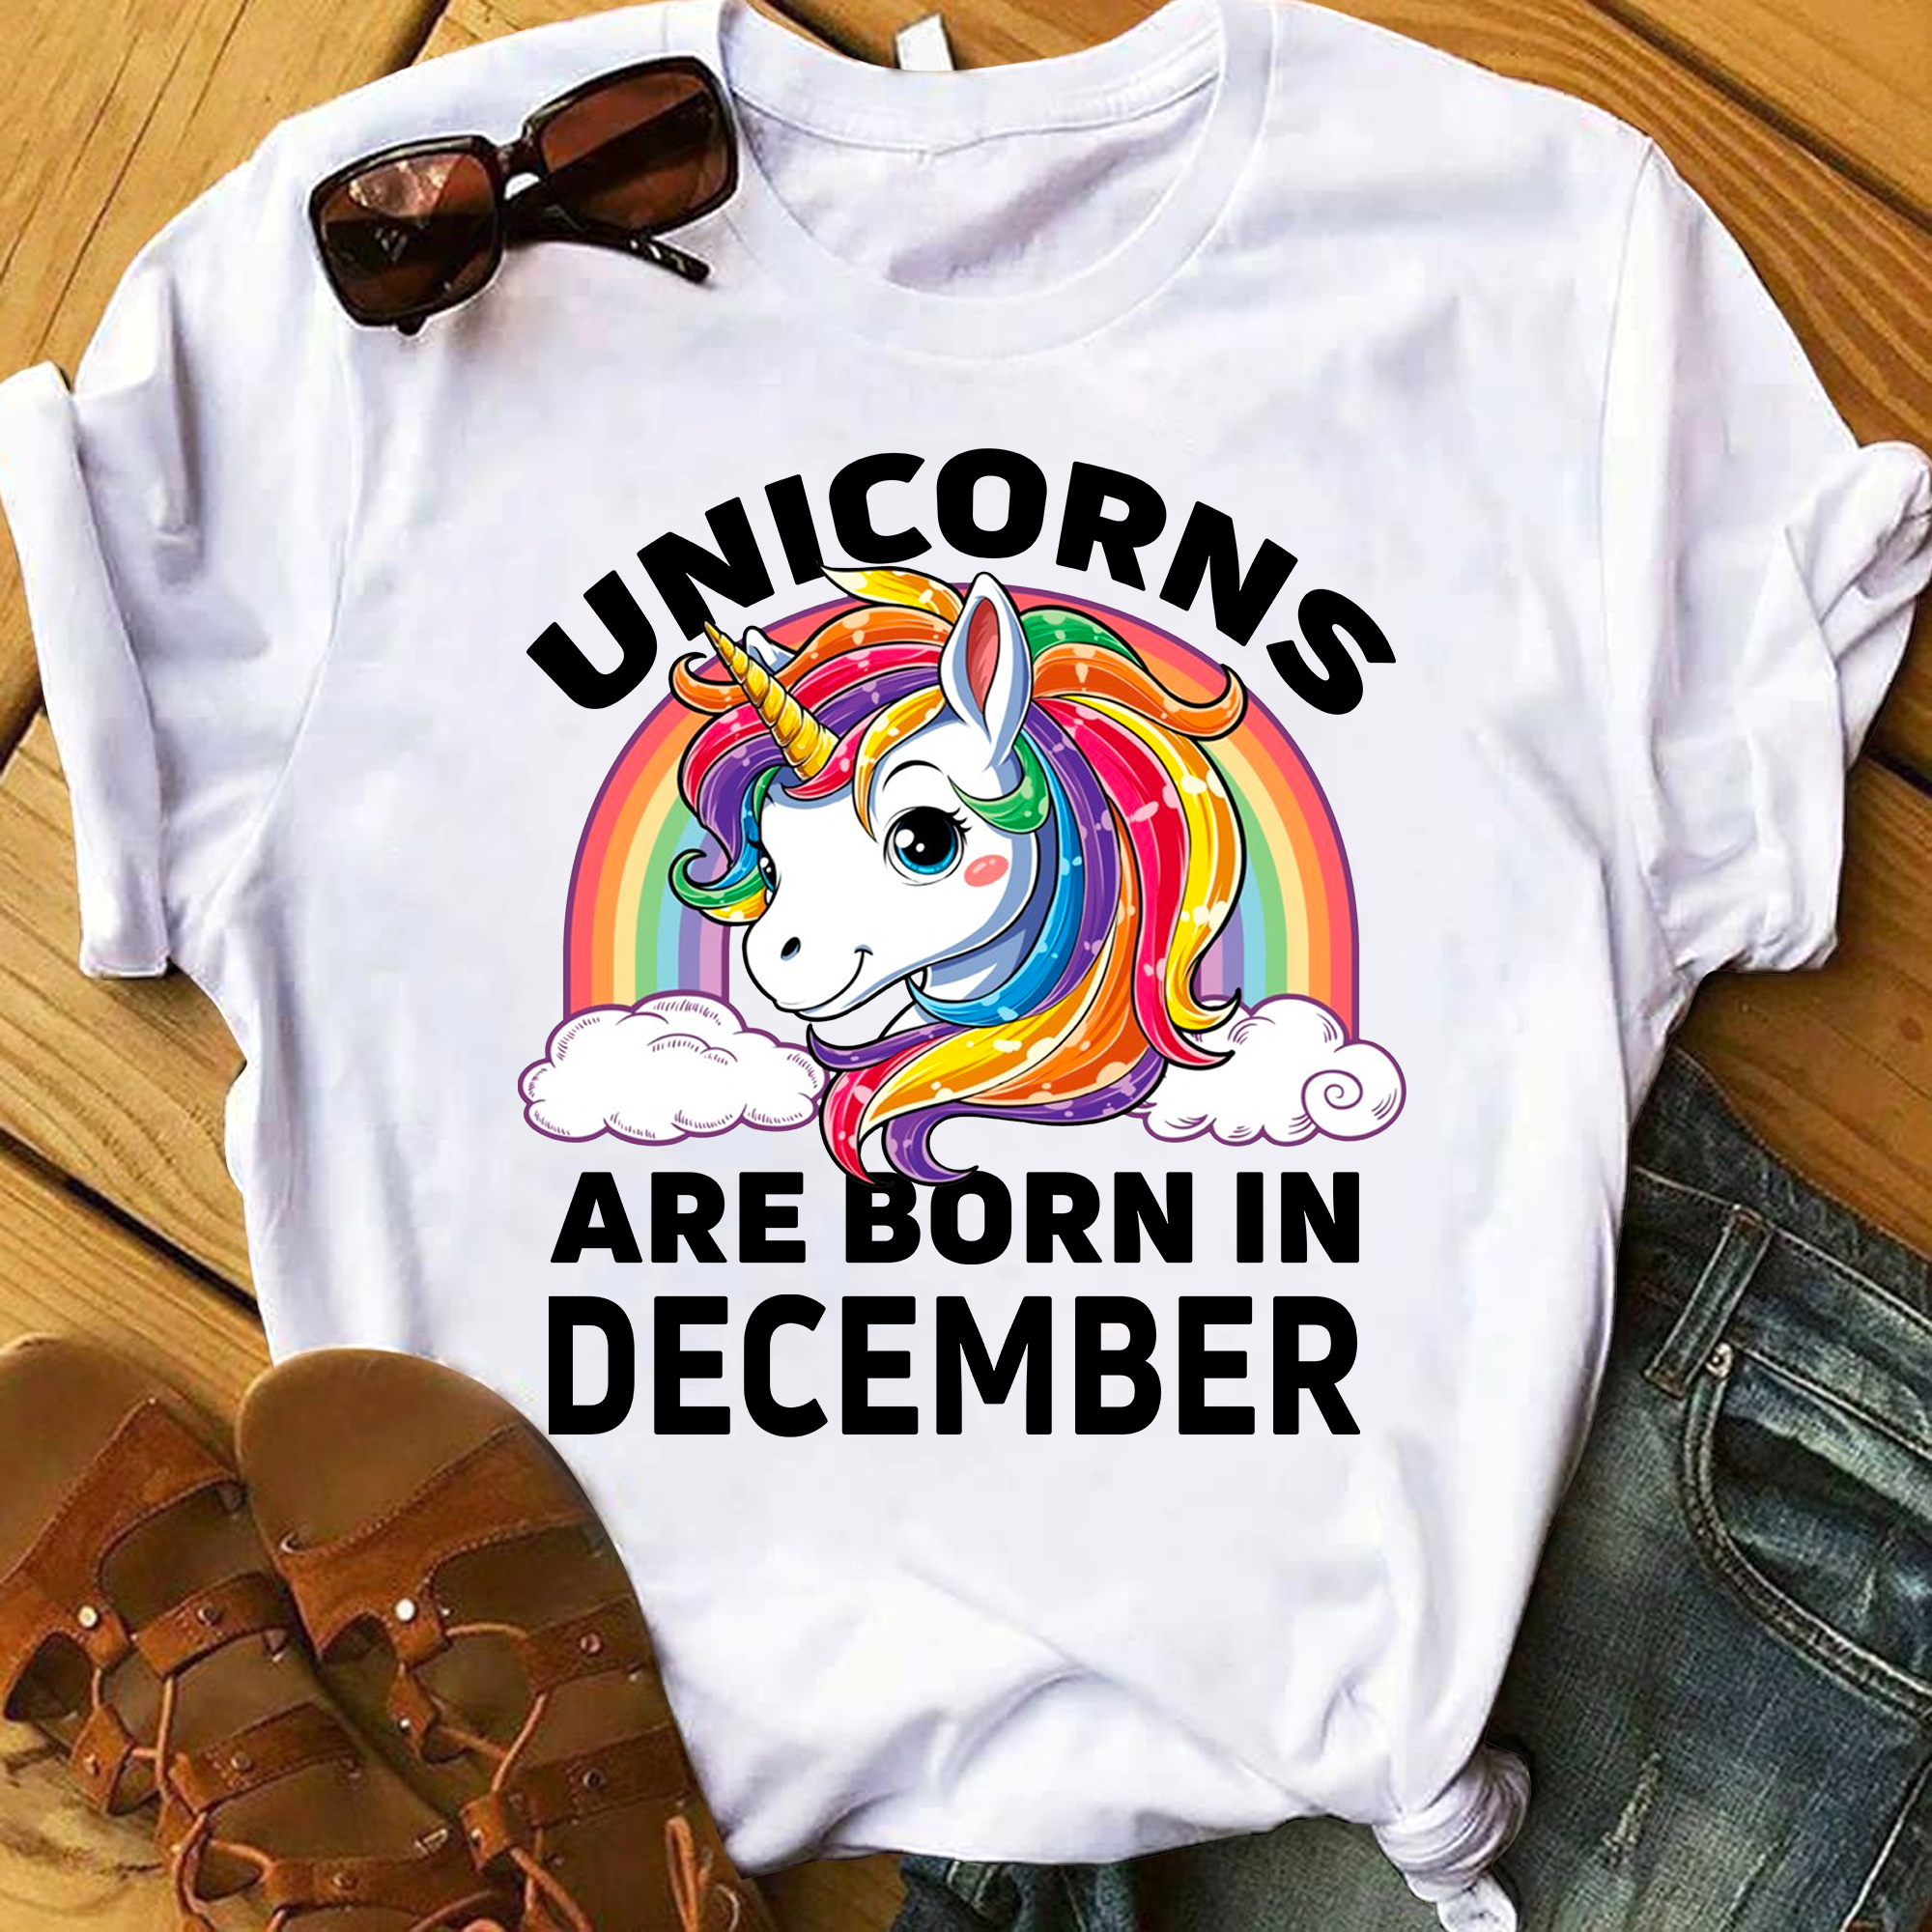 Unicorns Are Born In December Tshirt, Birthday Gift For Unicorn Lovers